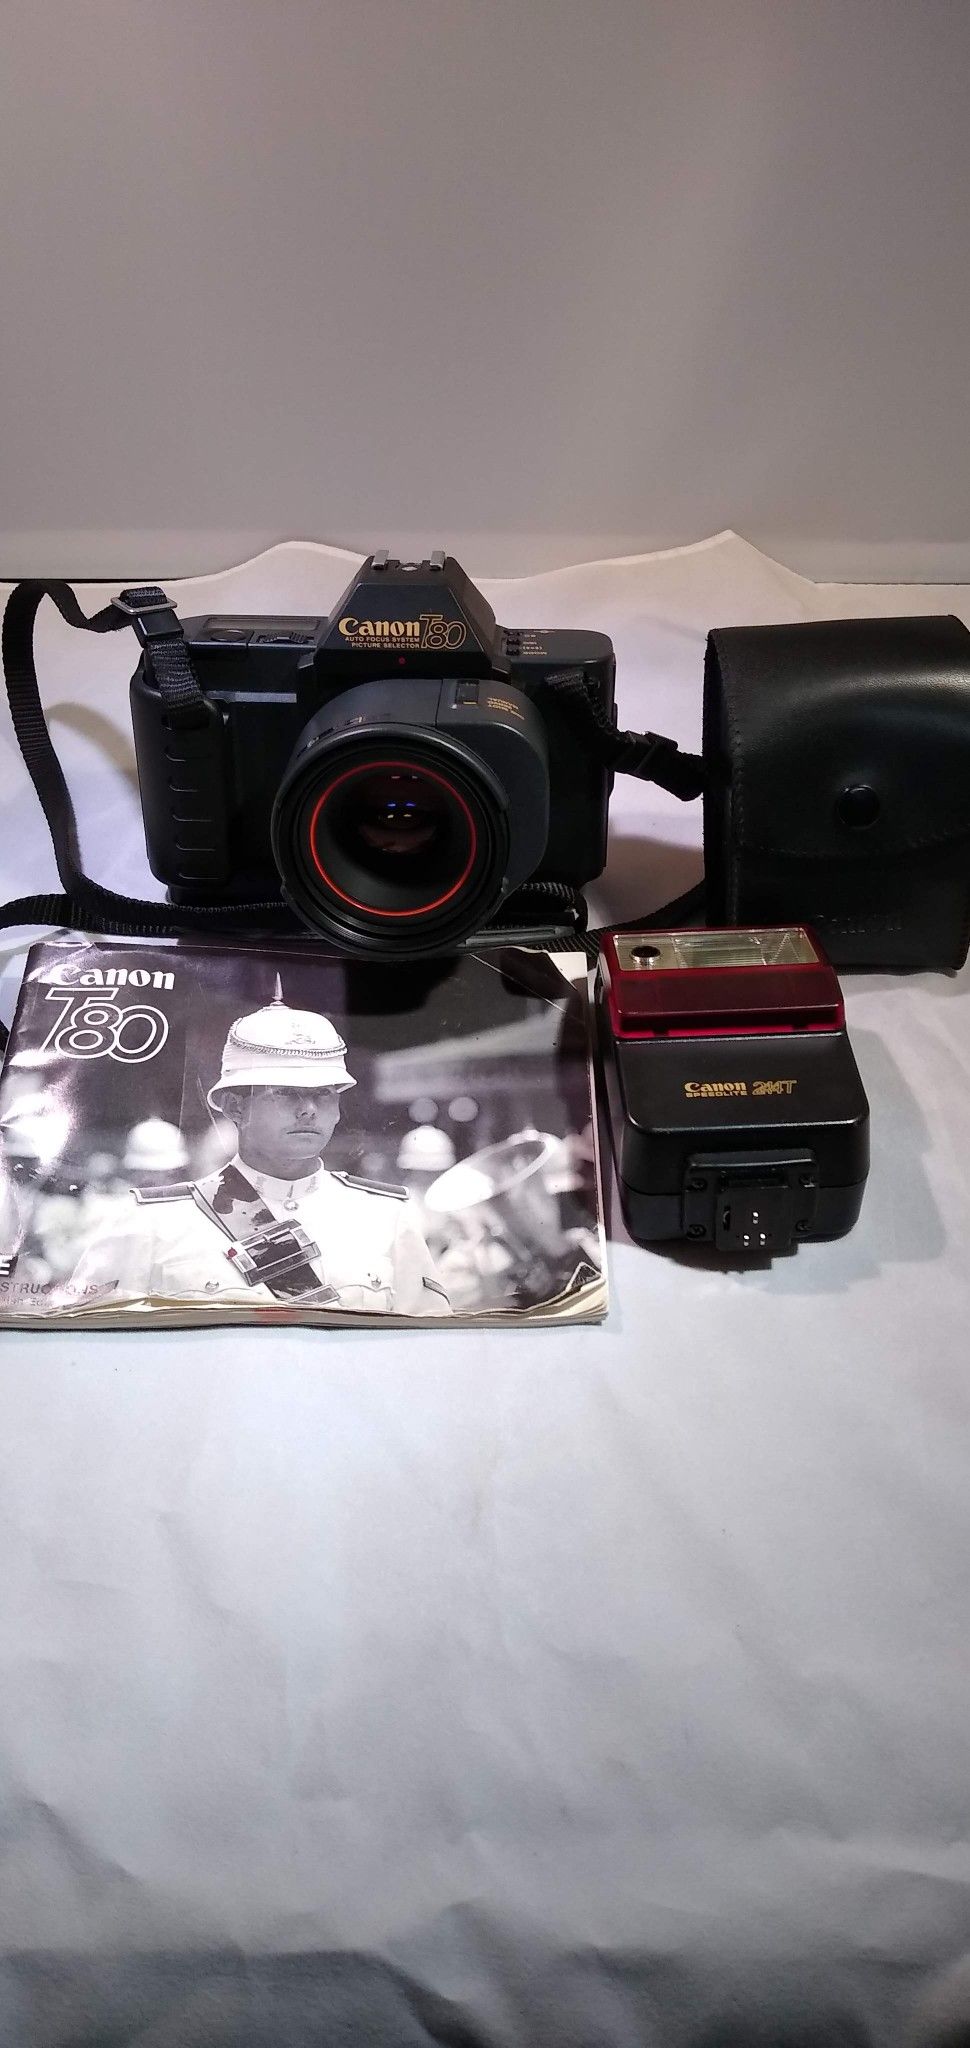 Canon T80 35mm film camera like new